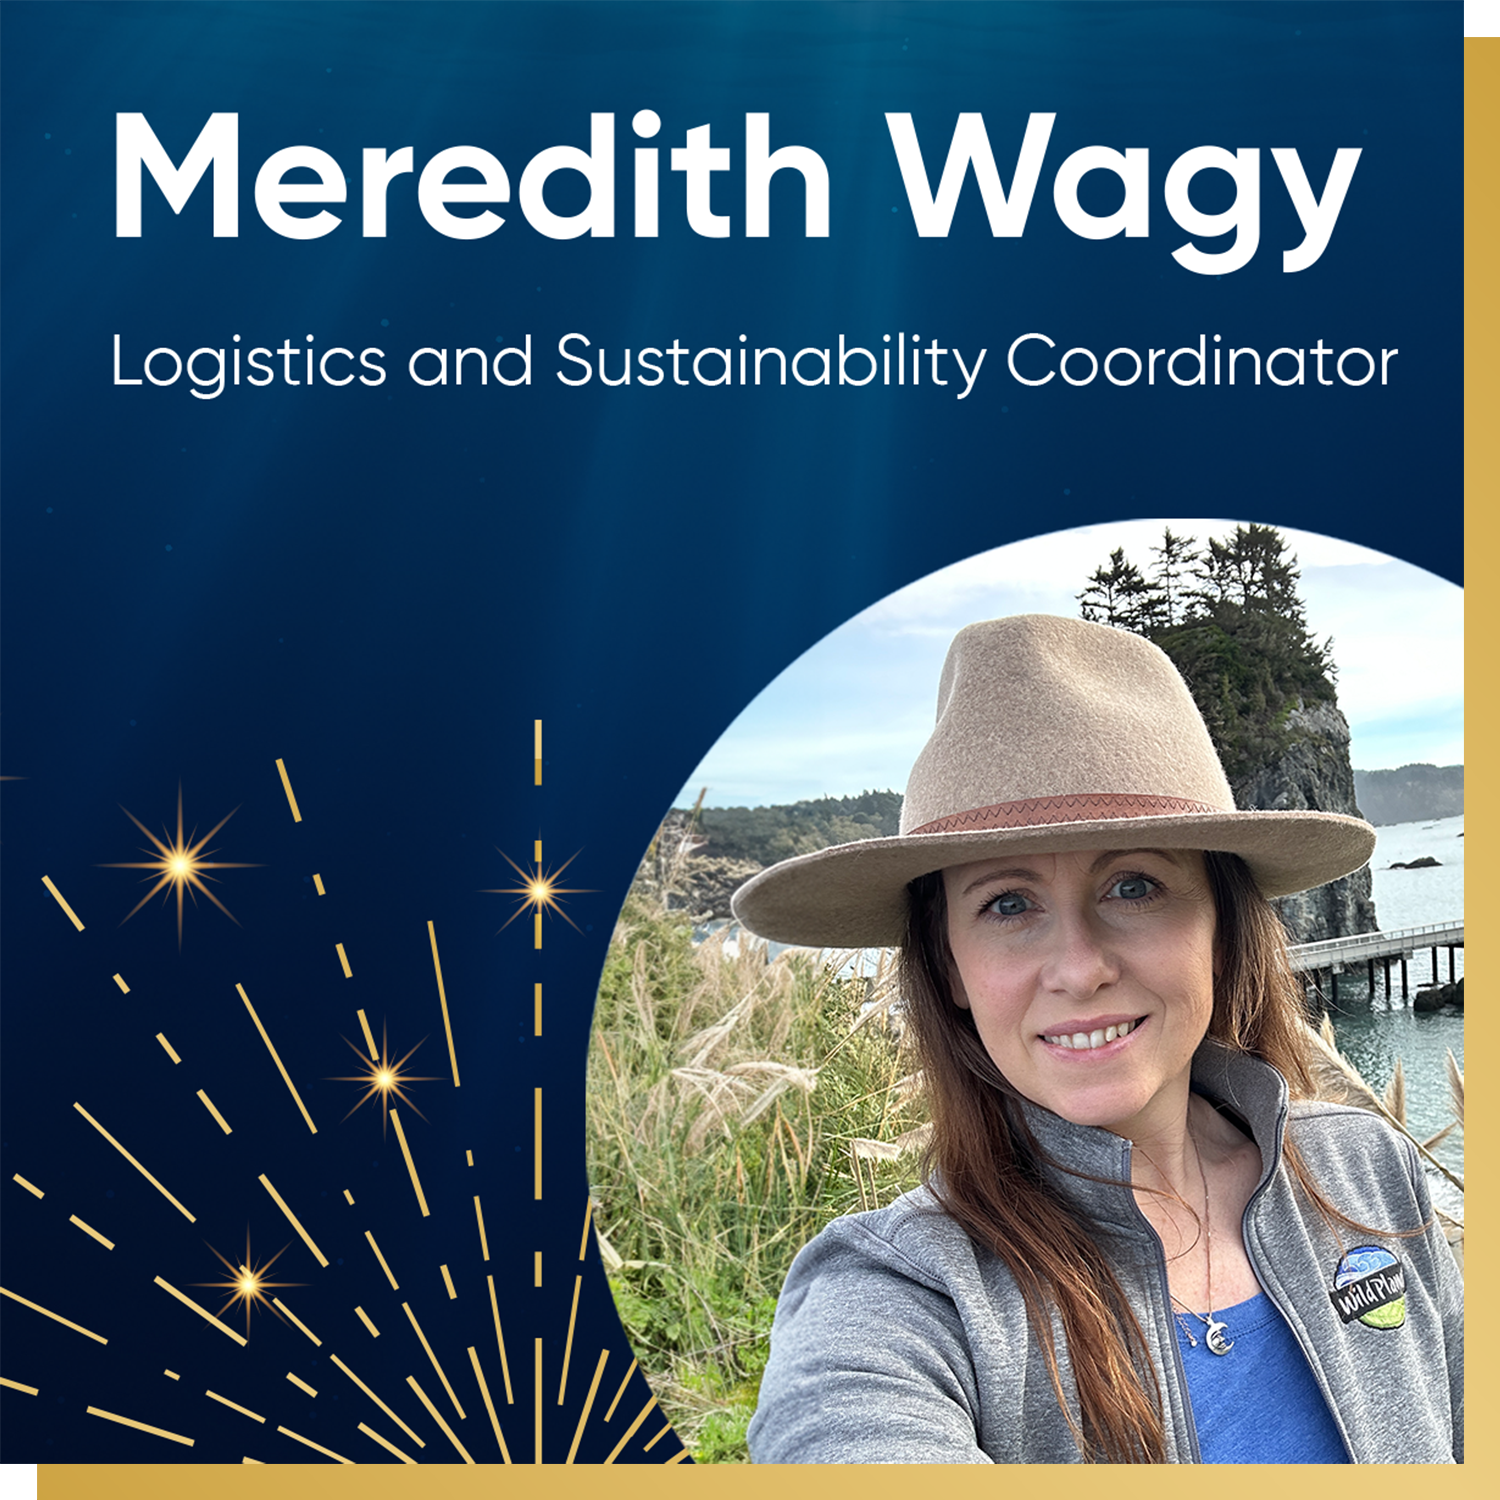 Employee Spotlight - Meredith Wagy, Logistics and Sustainability Coordinator, Wild Planet